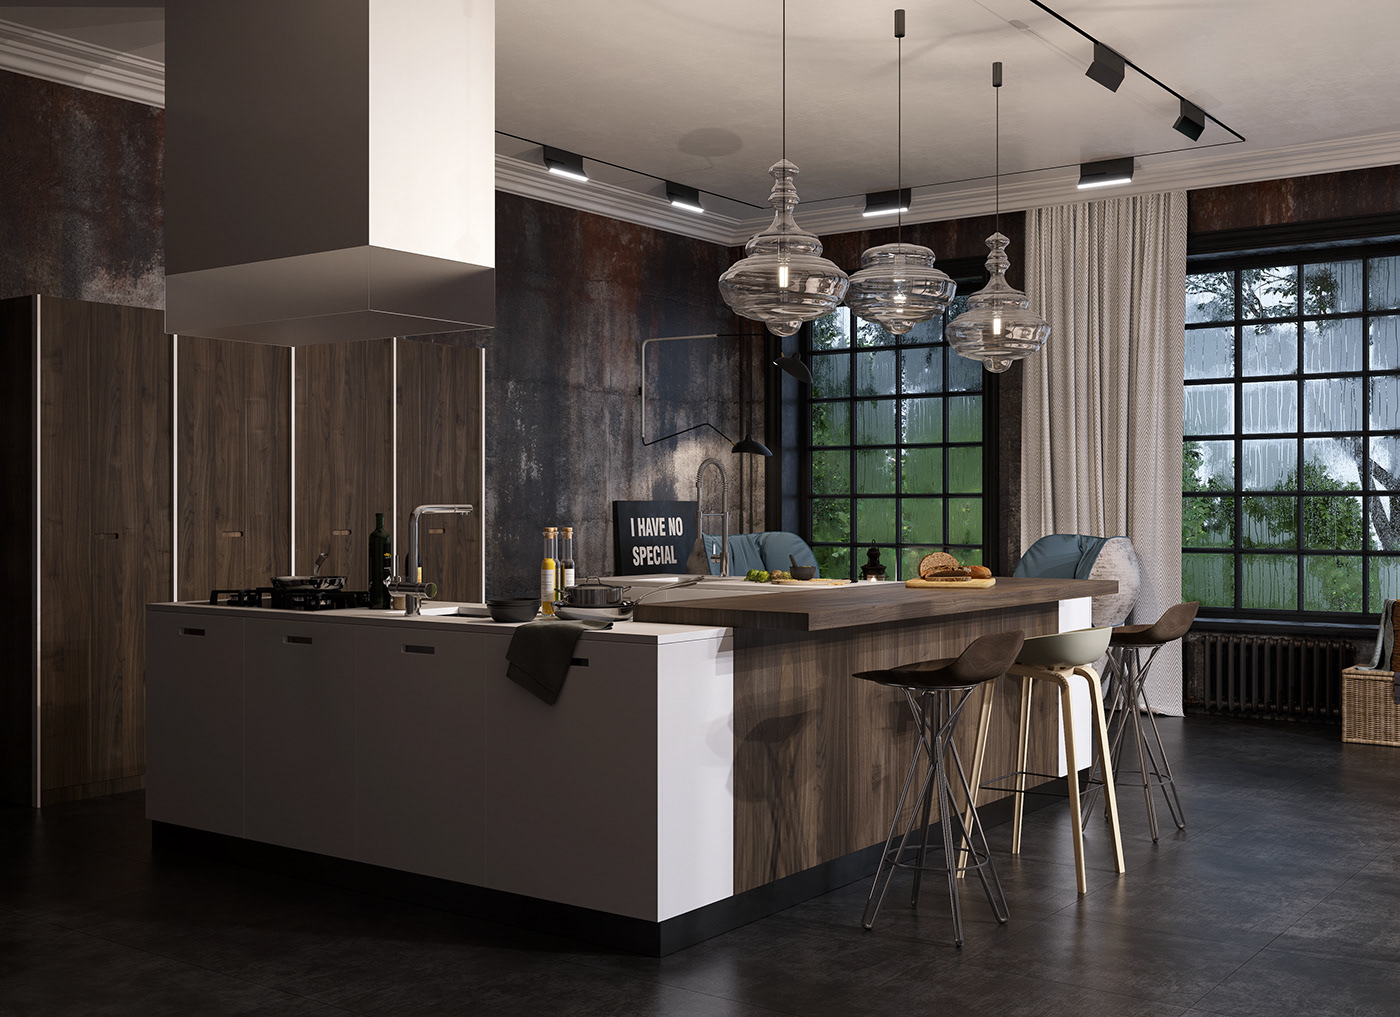 3D 3ds max corona render  Interior interior design  LOFT LOFT DESIGN Render visualization